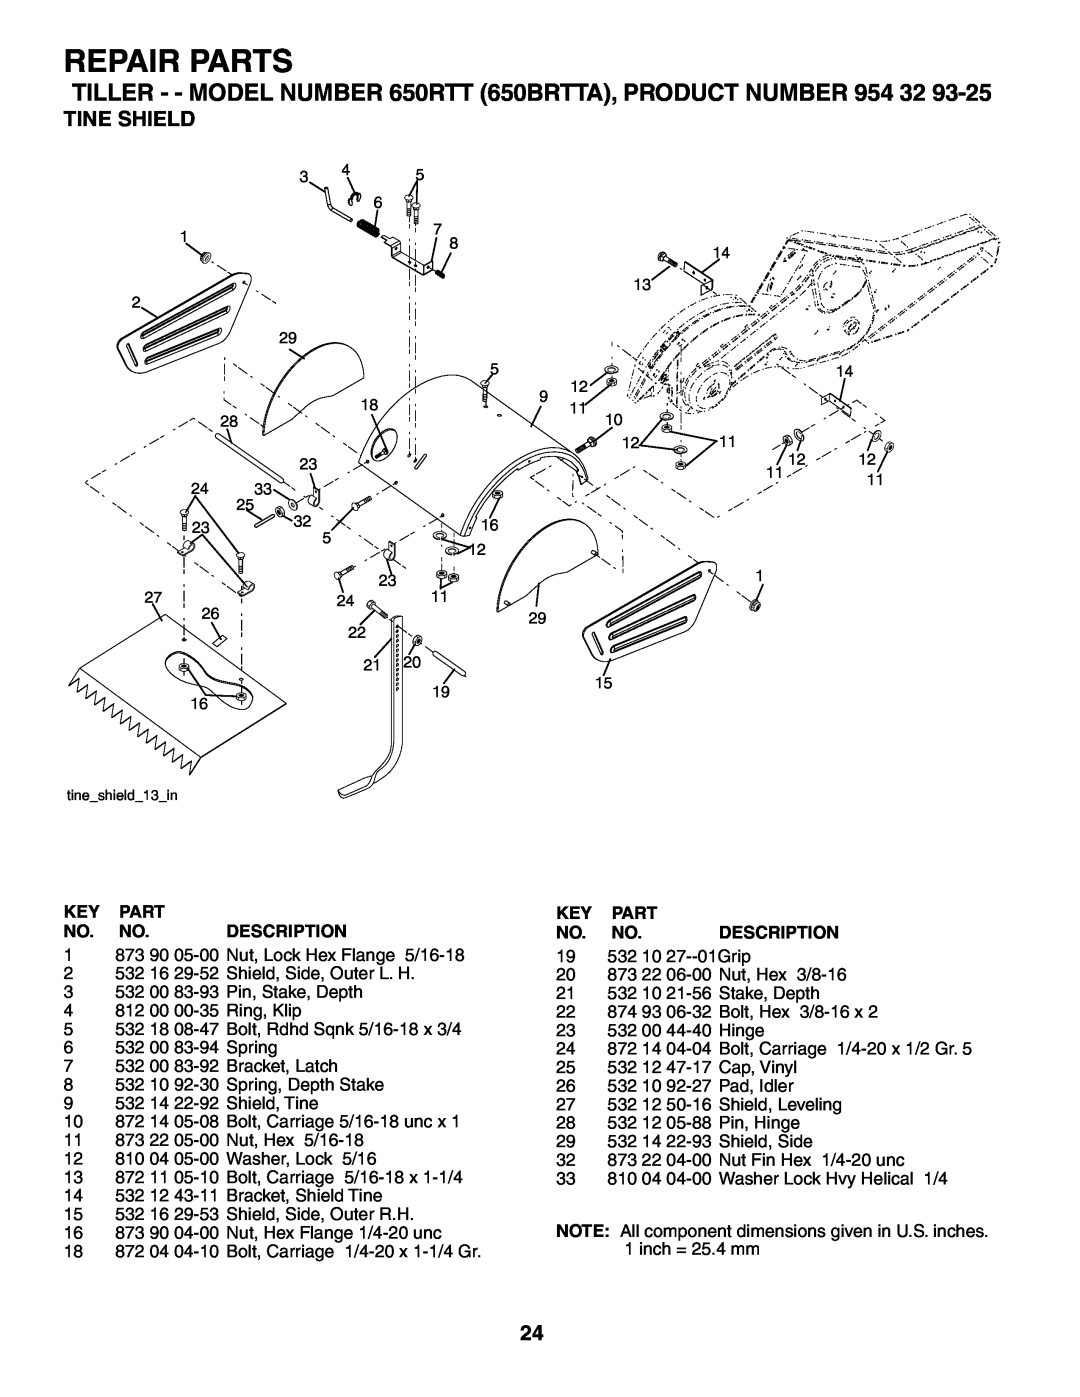 Husqvarna owner manual Tine Shield, Repair Parts, TILLER - - MODEL NUMBER 650RTT 650BRTTA, PRODUCT NUMBER 954 